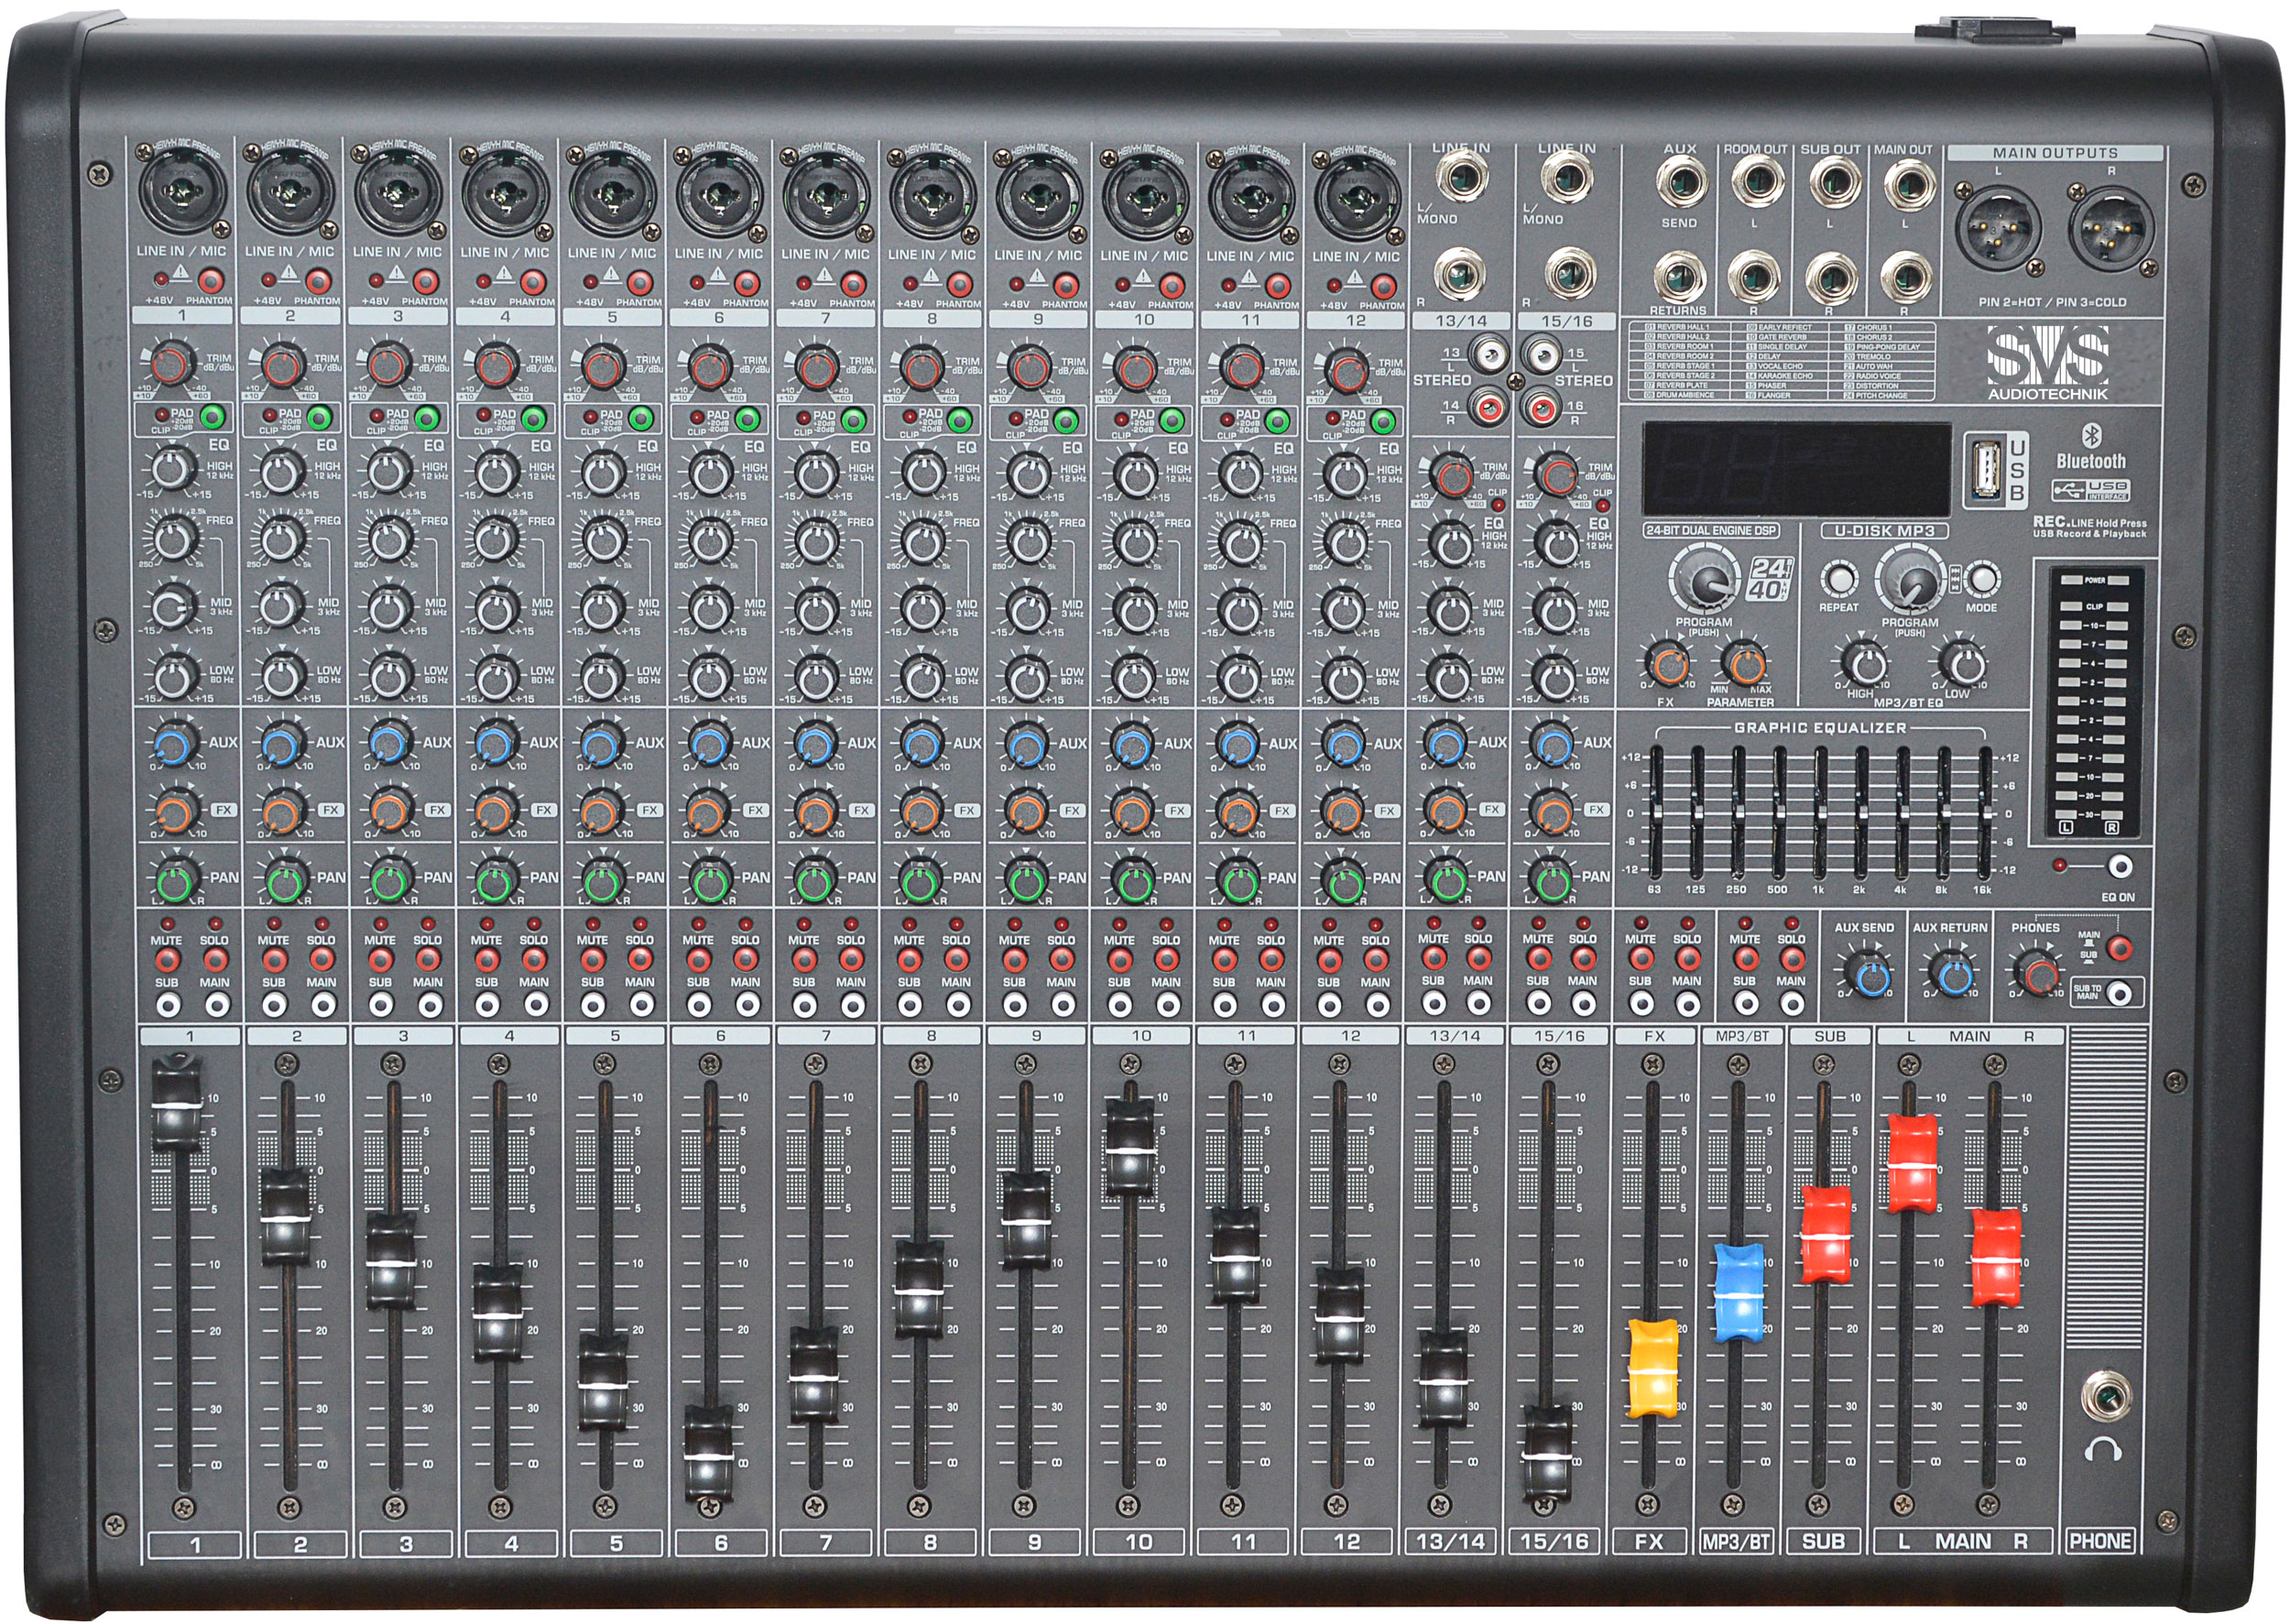 SVS Audiotechnik mixers AM-16